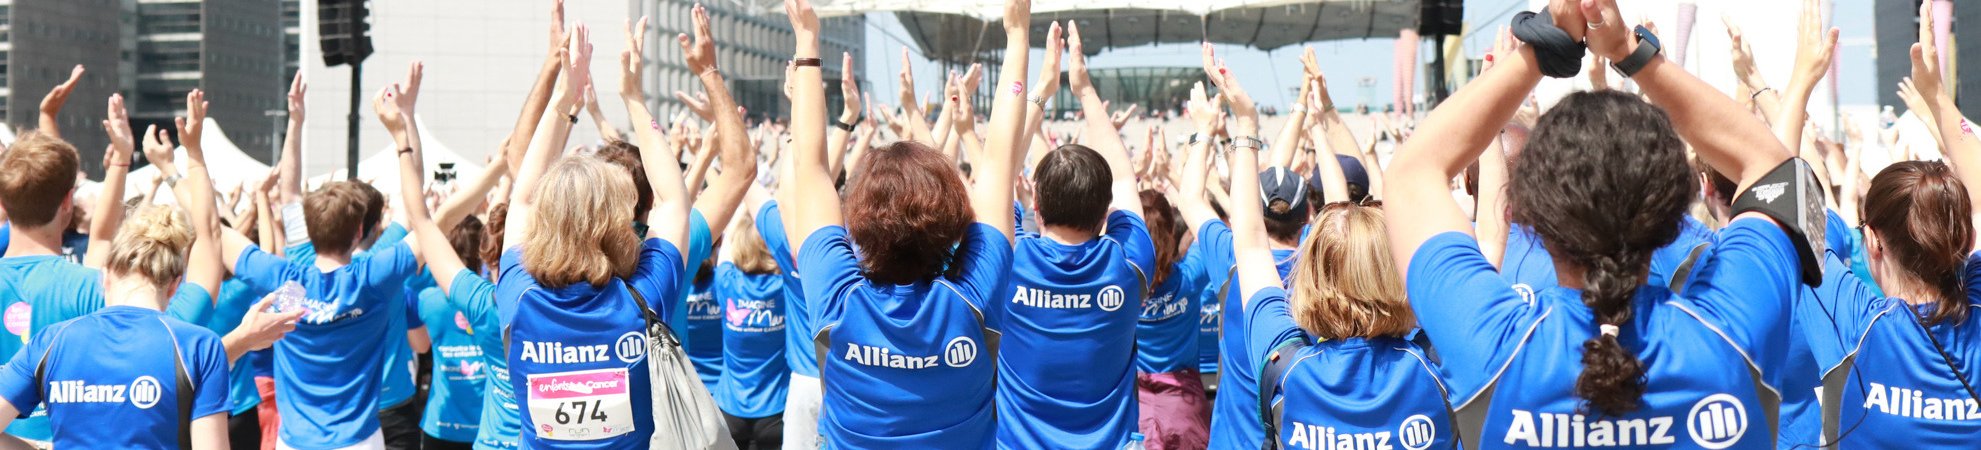 Responsable d'équipe - Allianz Banque H/F